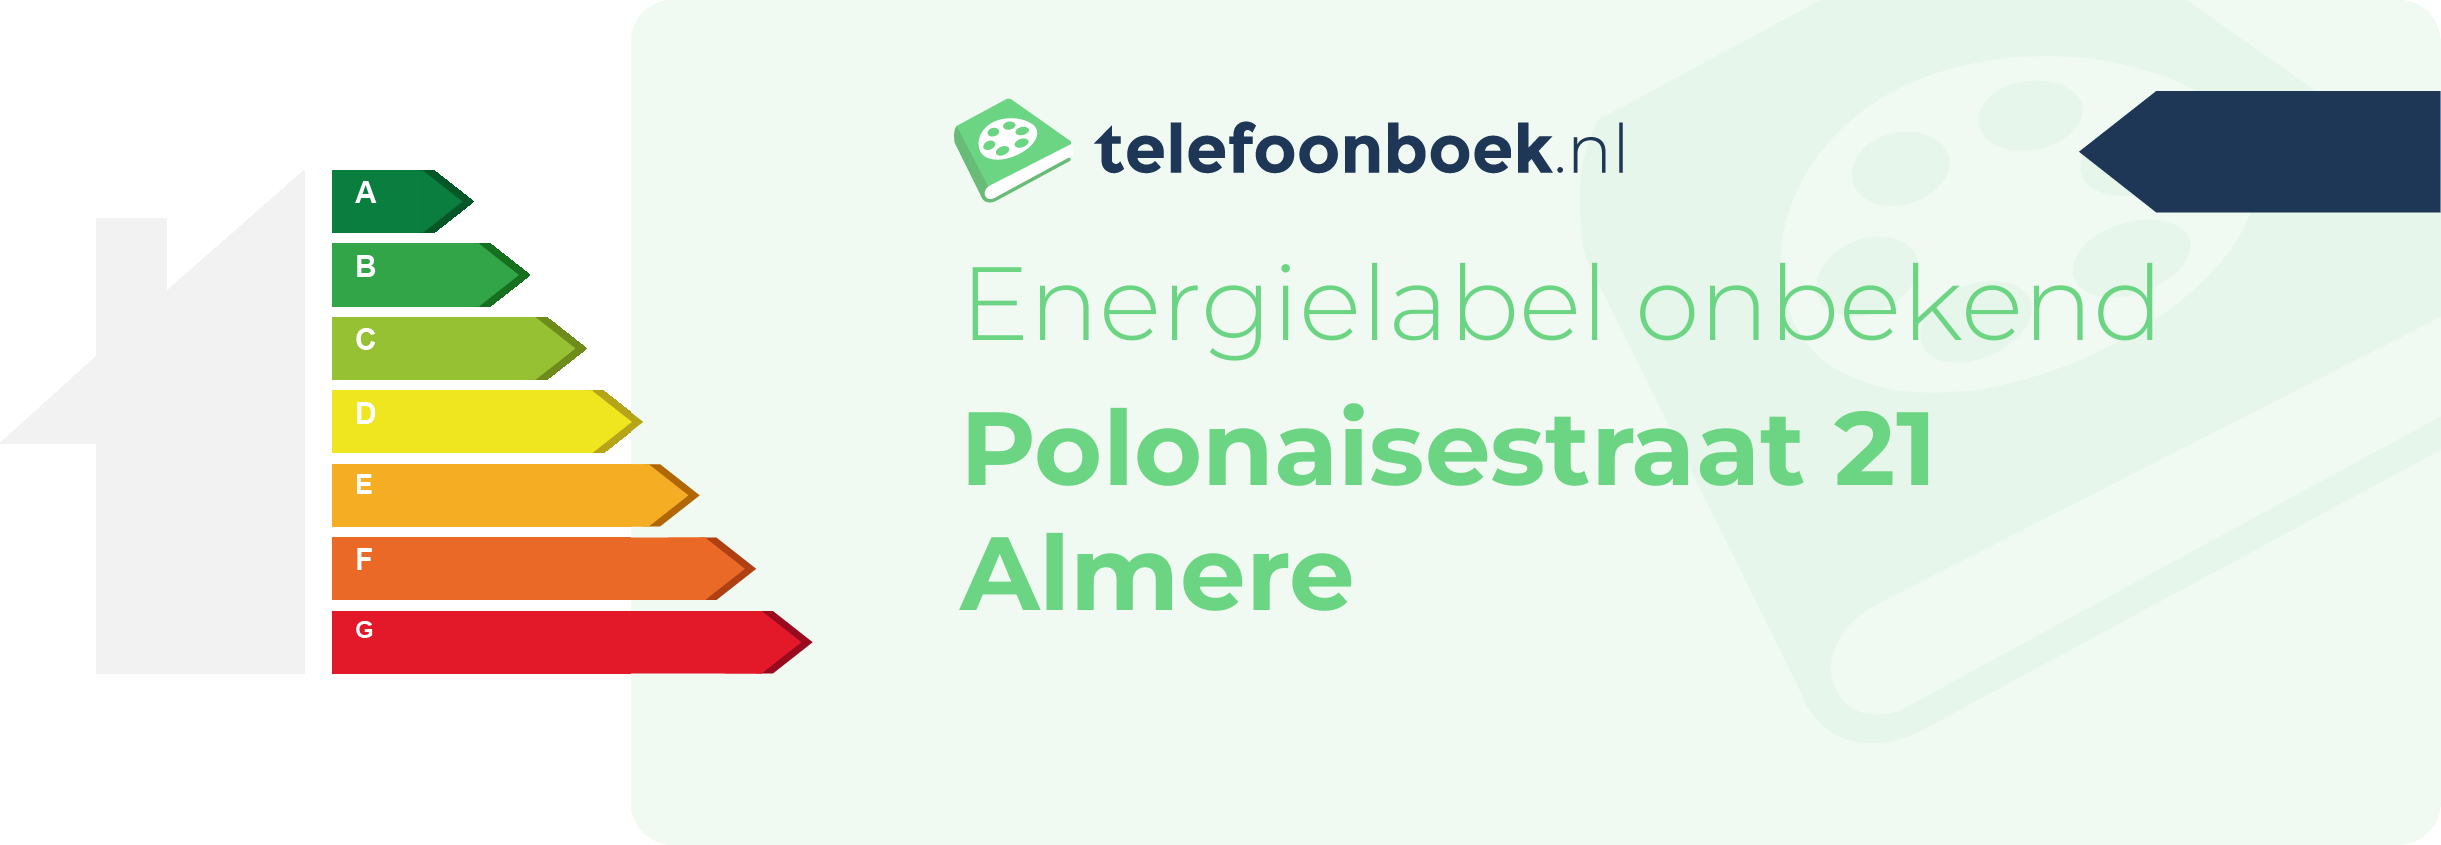 Energielabel Polonaisestraat 21 Almere